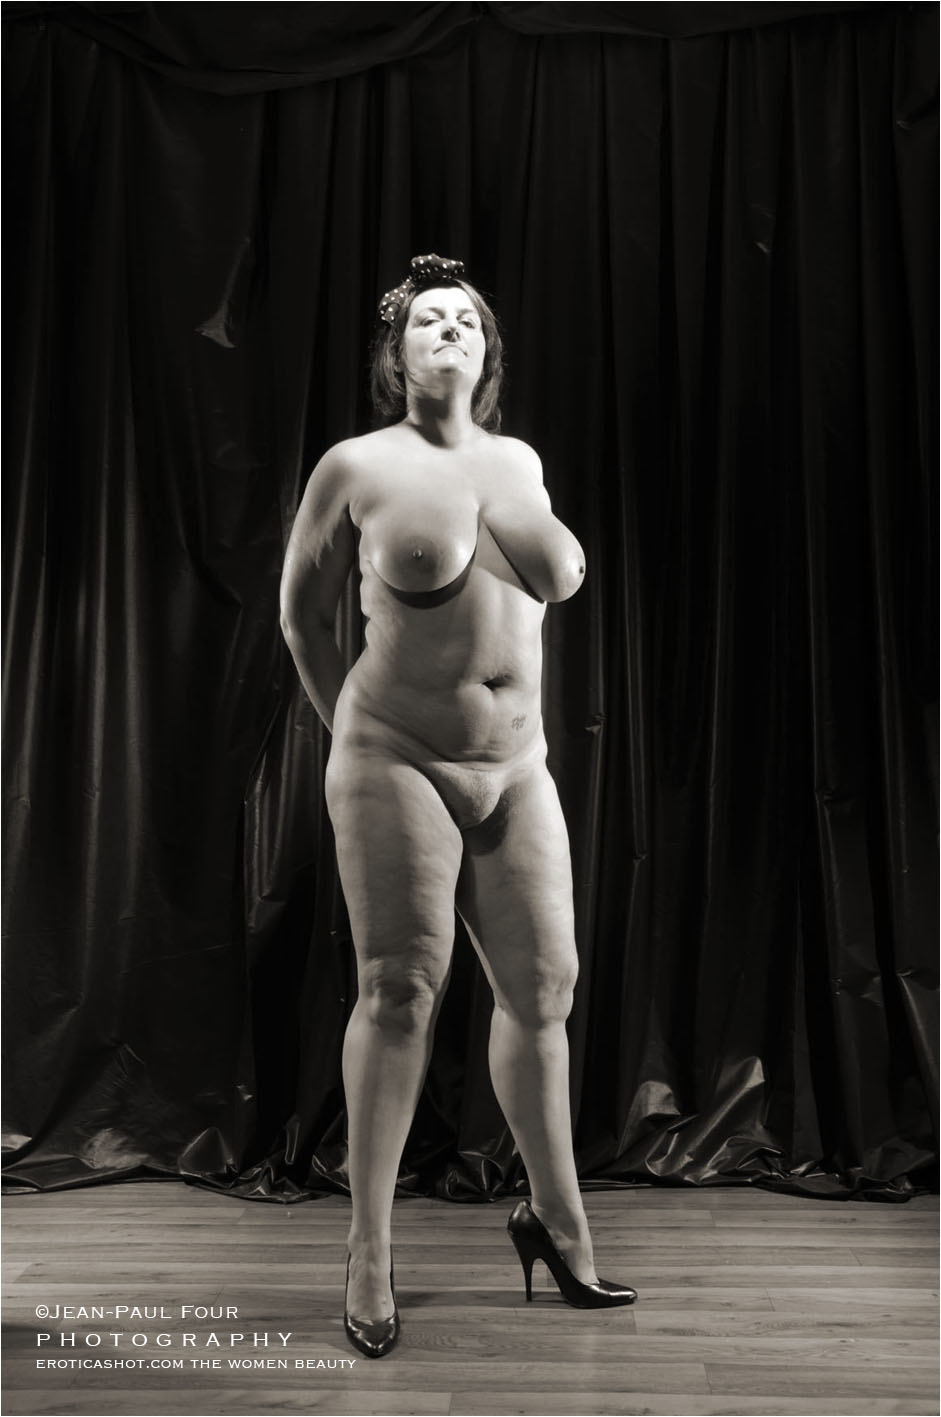 Antheorie, nice round nude, nice round mont de Venus, bondage, shibari, dildo fucking, go to eroticashot.com, pict by ©Jean-Paul Four